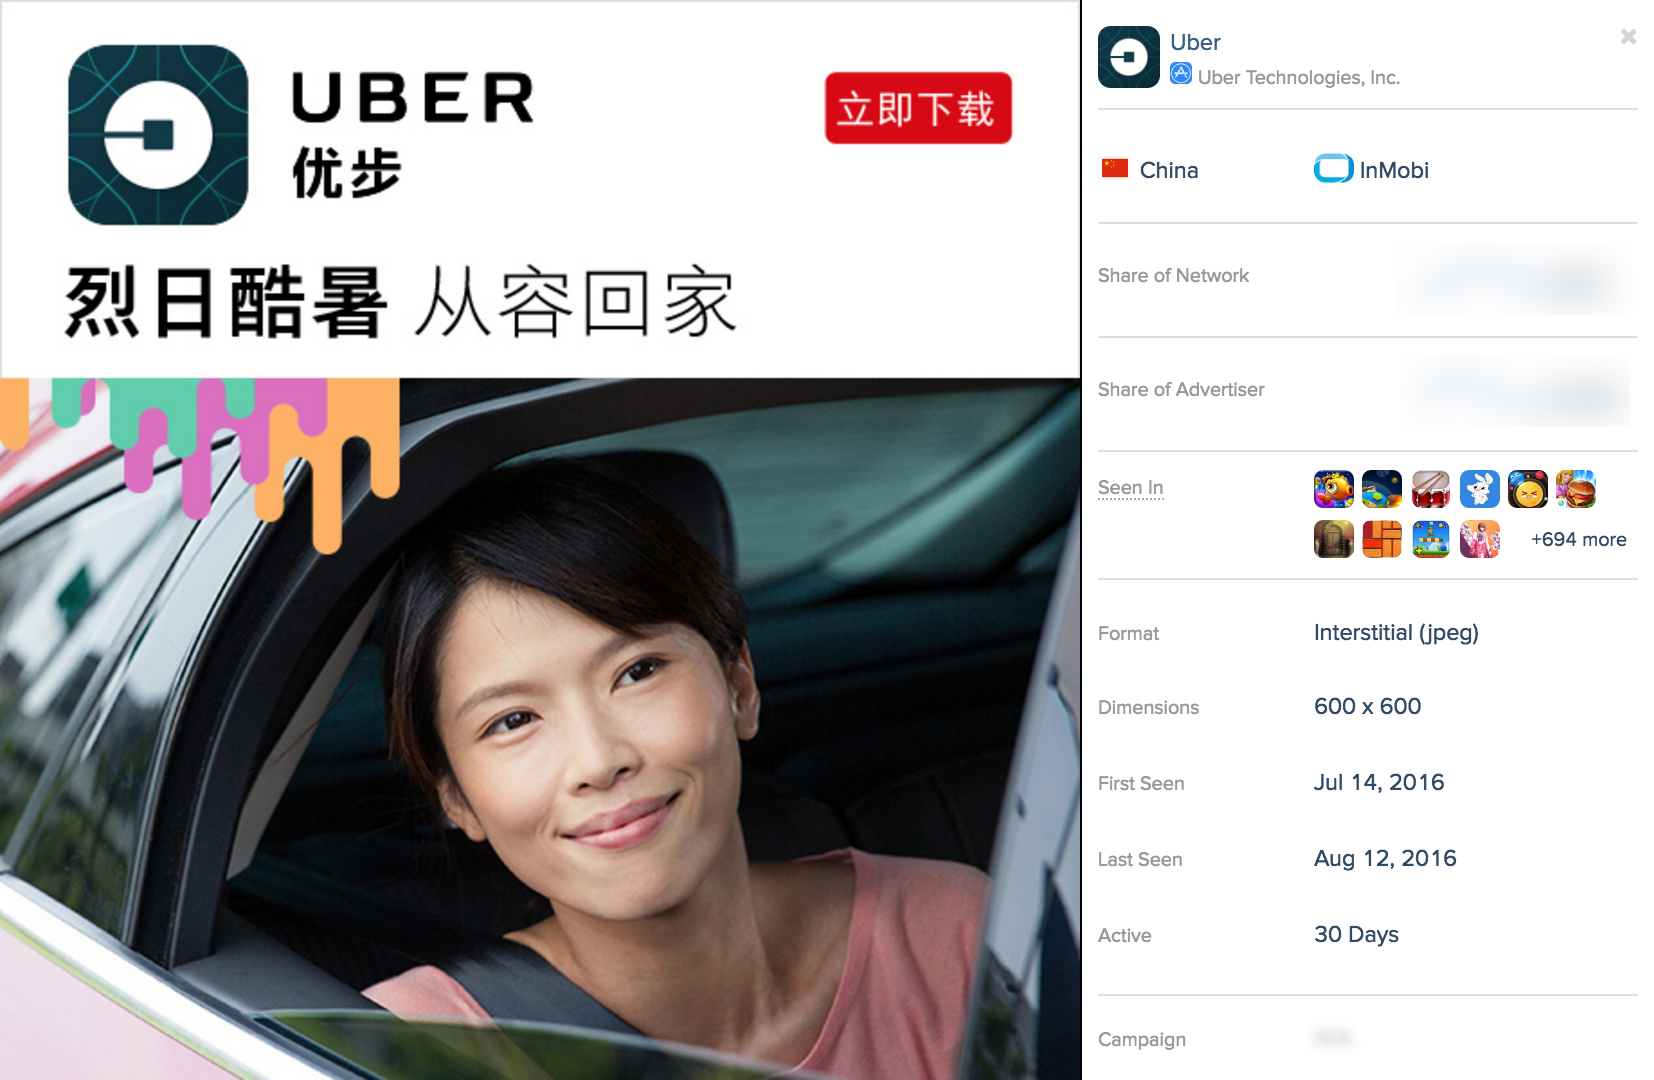 Uber China Advertisements